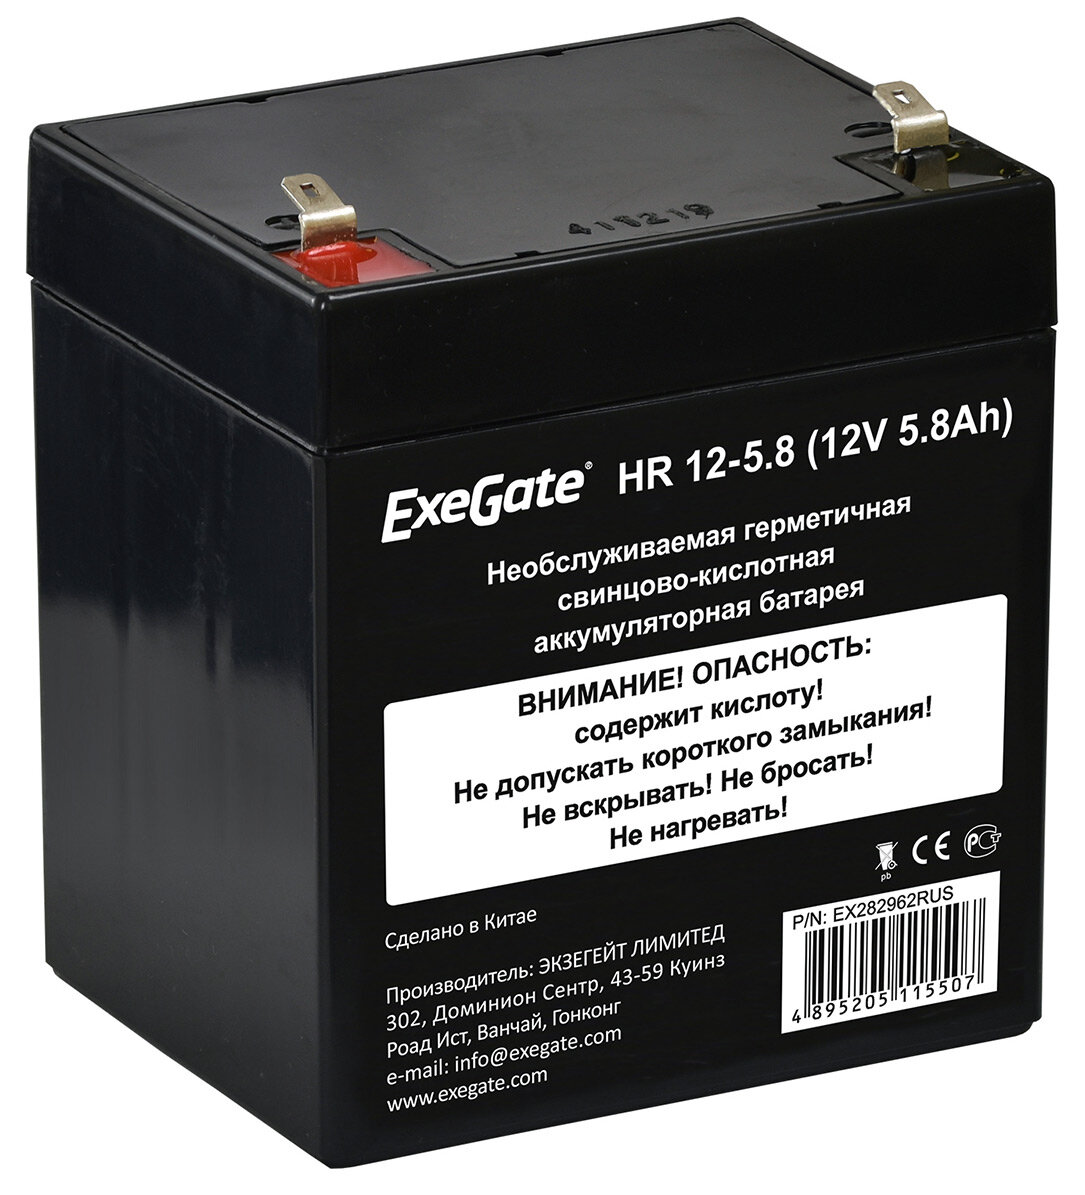 Exegate EX282962RUS Exegate EX282962RUS Аккумуляторная батарея ExeGate HR 12-5.8 (12V 5.8Ah 1223W) клеммы F1